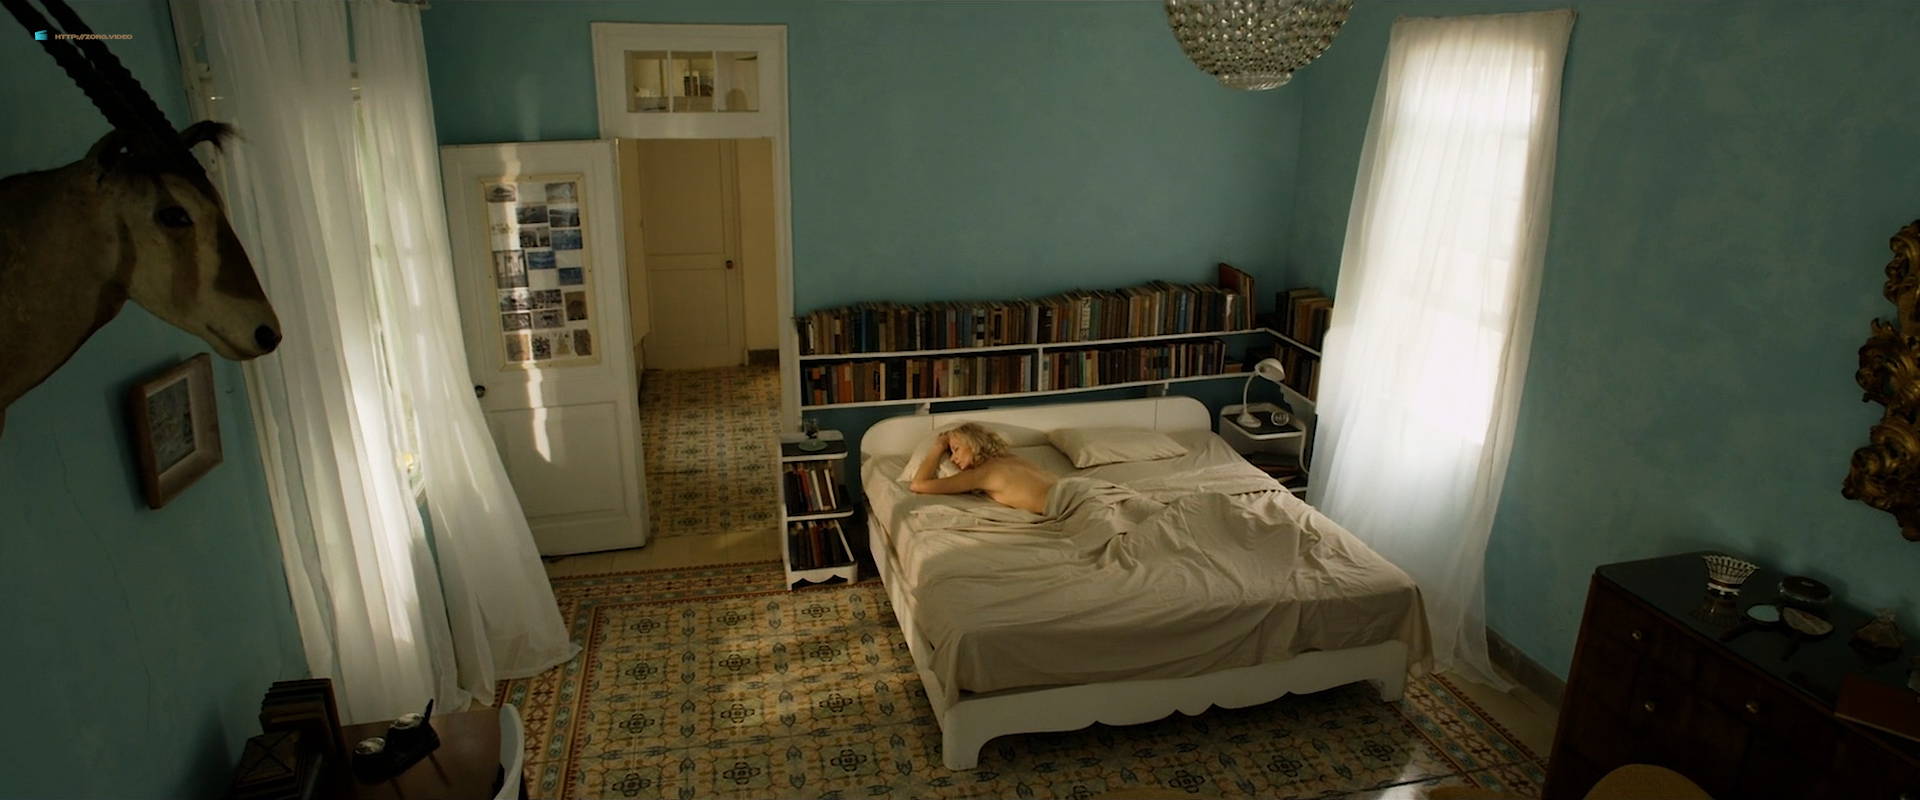 Minka Kelly nude butt Joely Richardson nude and skinny dipping - Papa Hemingway in Cuba (2015) HD 1080p web (2)